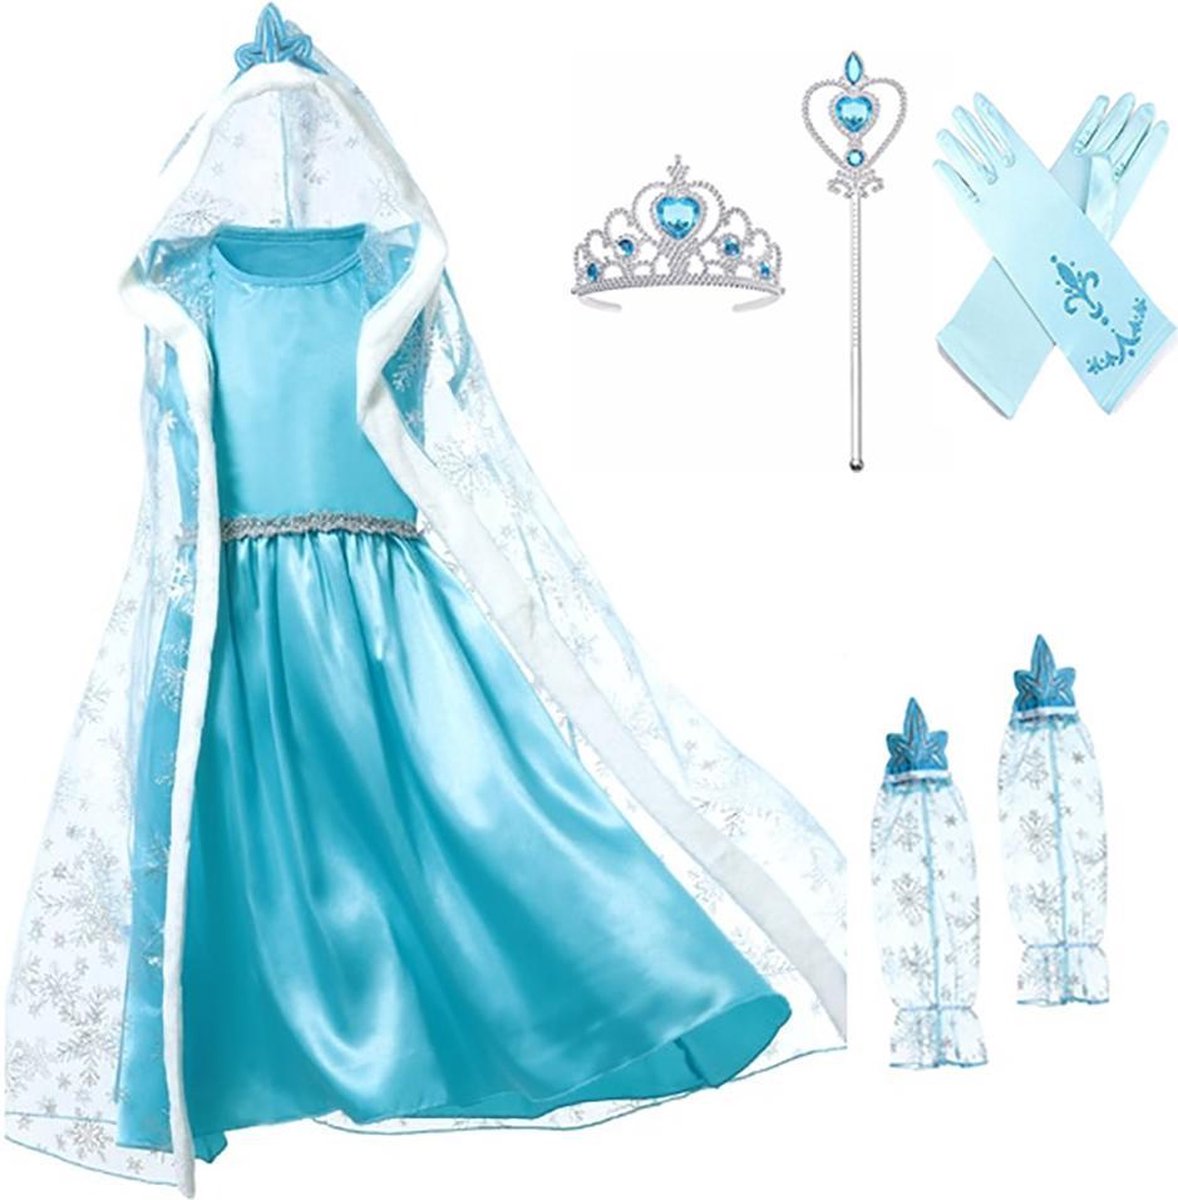 Het Betere Merk - Prinsessenjurk meisje - Blauwe jurk - maat 122/128 (130) - losse cape + mouwen - Tiara - Toverstaf prinses - Handschoenen - Carnavalskleding meisje - Verkleedkleren Kind - Cadeau meisje - Verjaardag - Prinsessen speelgoed